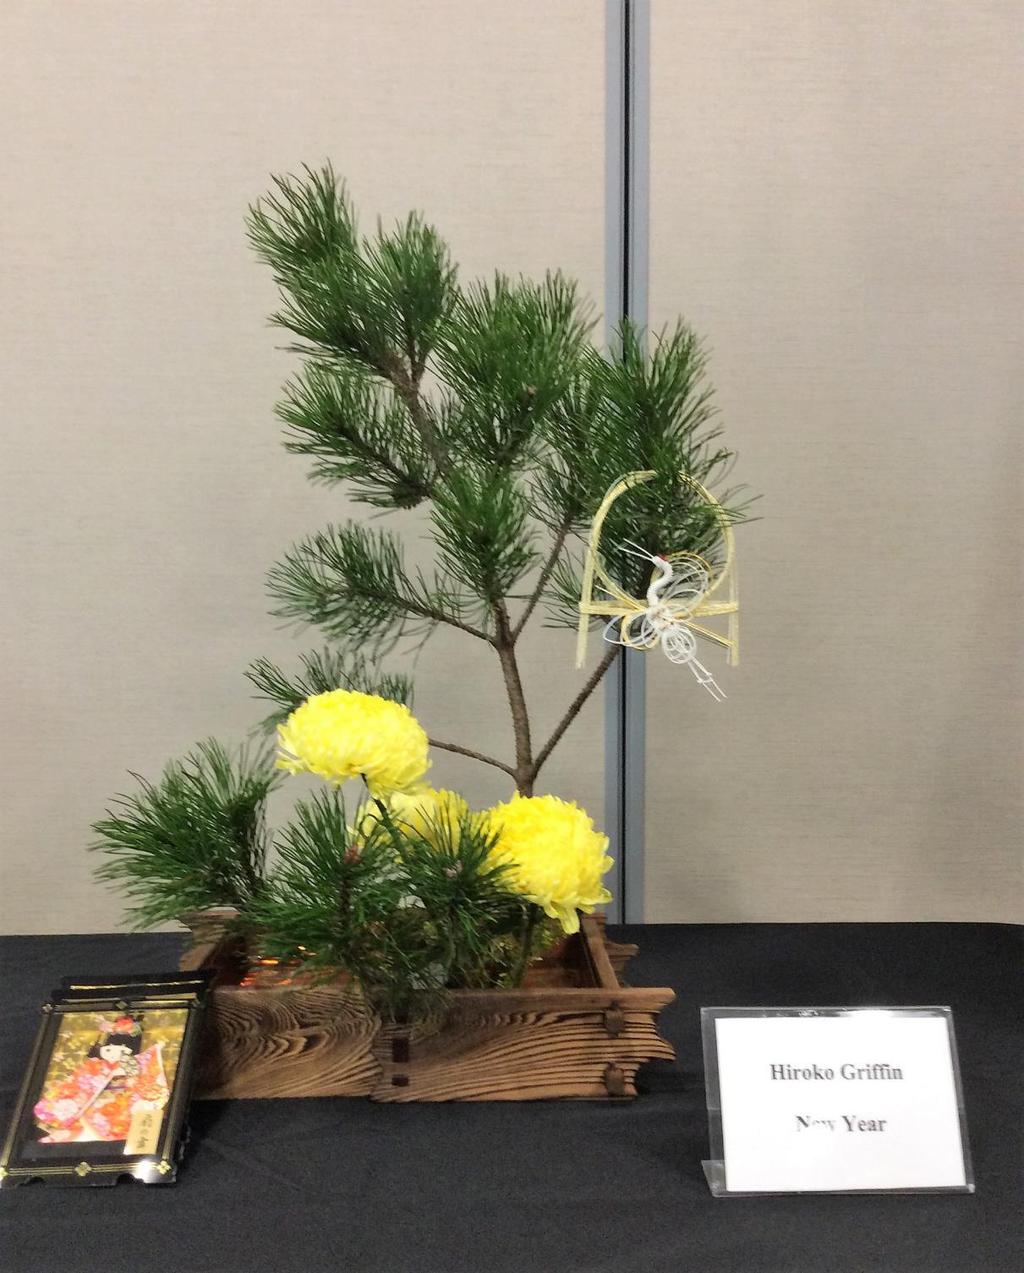 New Year Materials: Pine tree, Chrysanthemum, Sorlidago and a